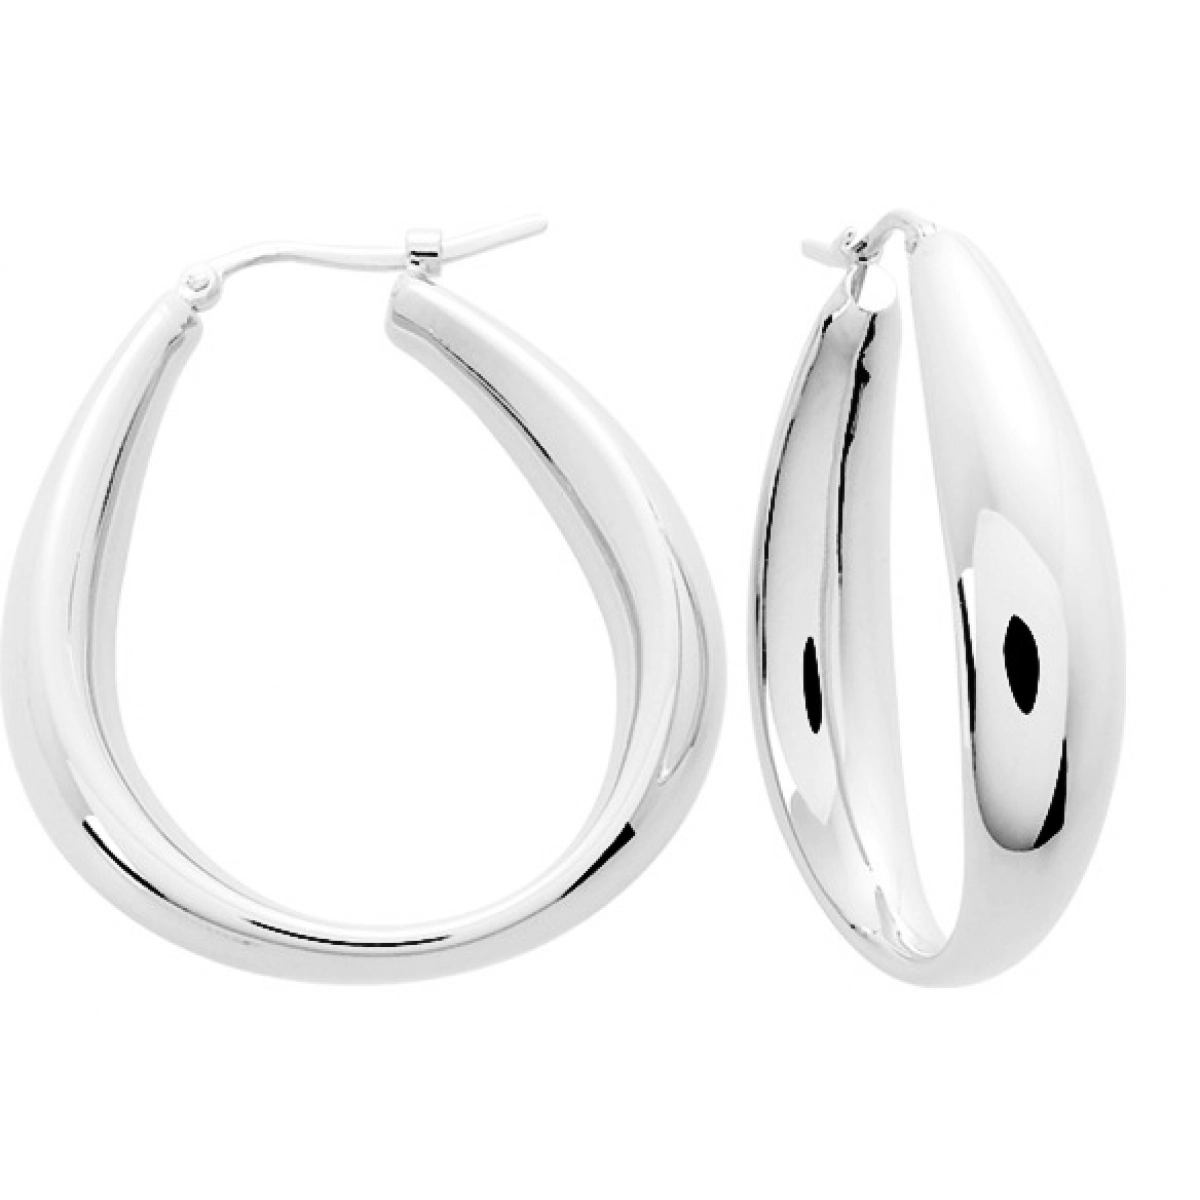 Earrings pair electroformed rh925 Silver  Lua Blanca  335553.0